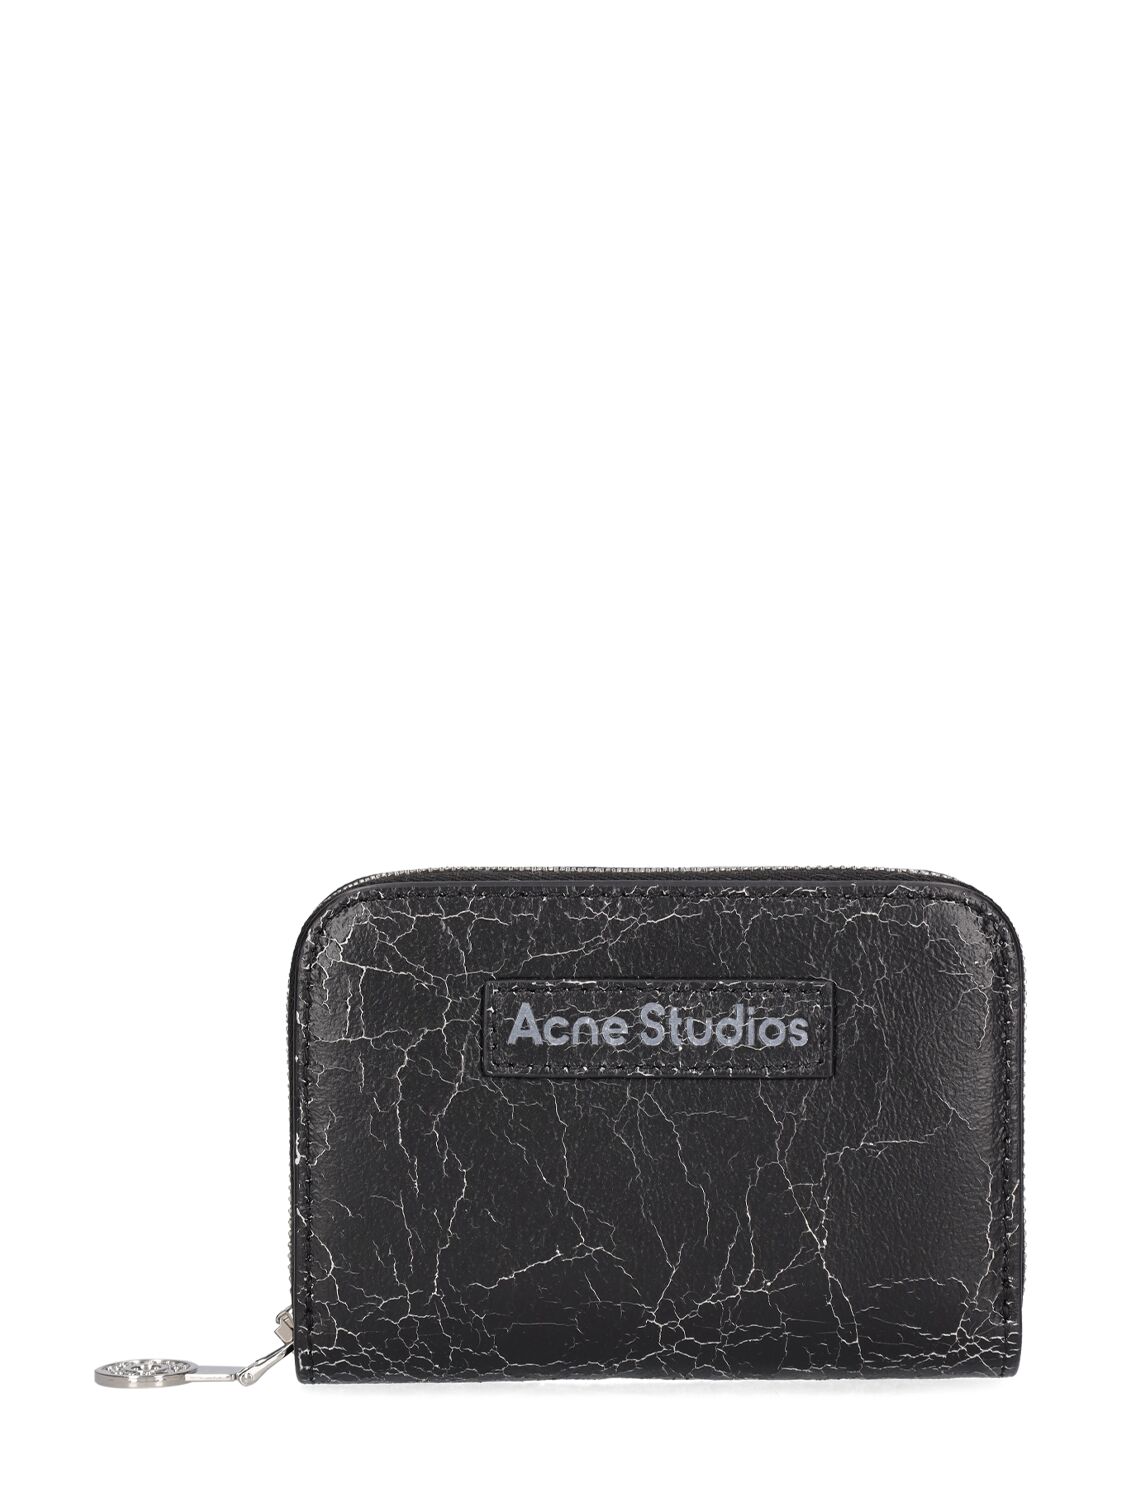 Image of Acite Leather Zip Around Wallet